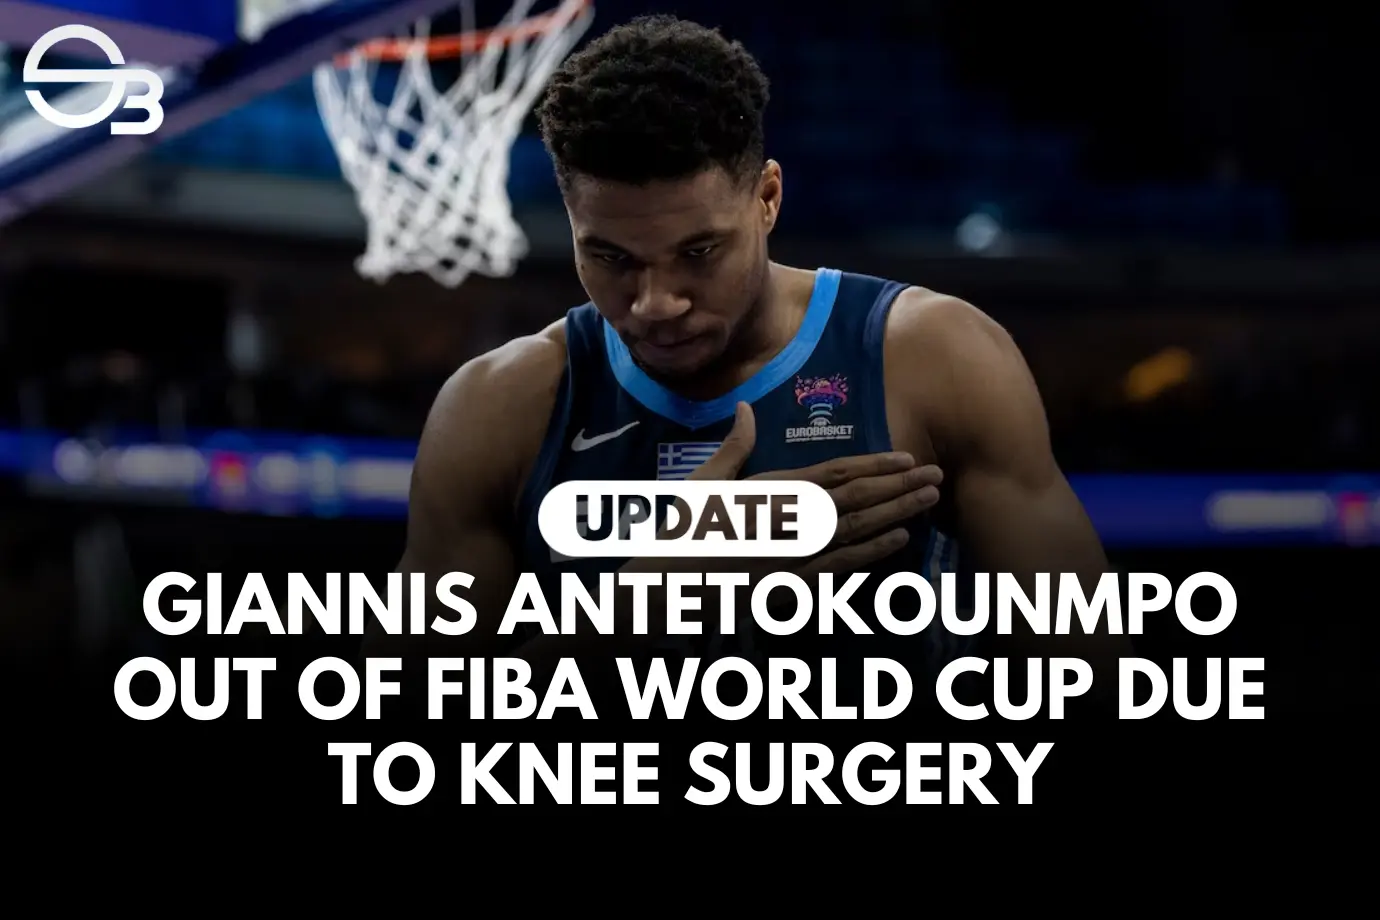 FIBA: Giannis Antetokounmpo Out of FIBA World Cup Due to Knee Surgery